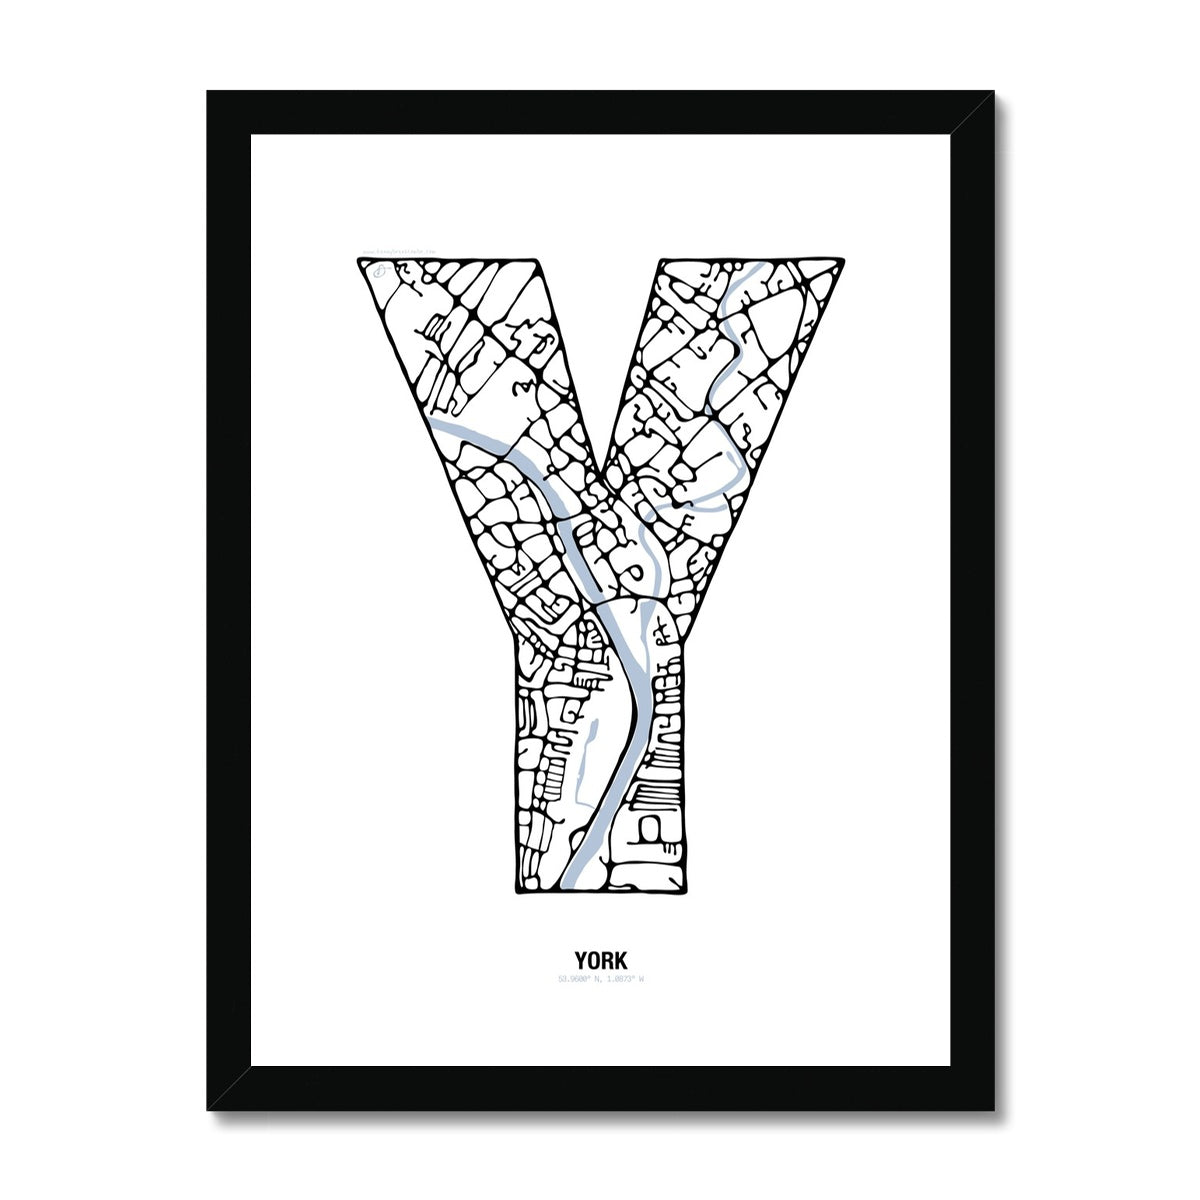 Maphabet Y - York - Danny Branscombe